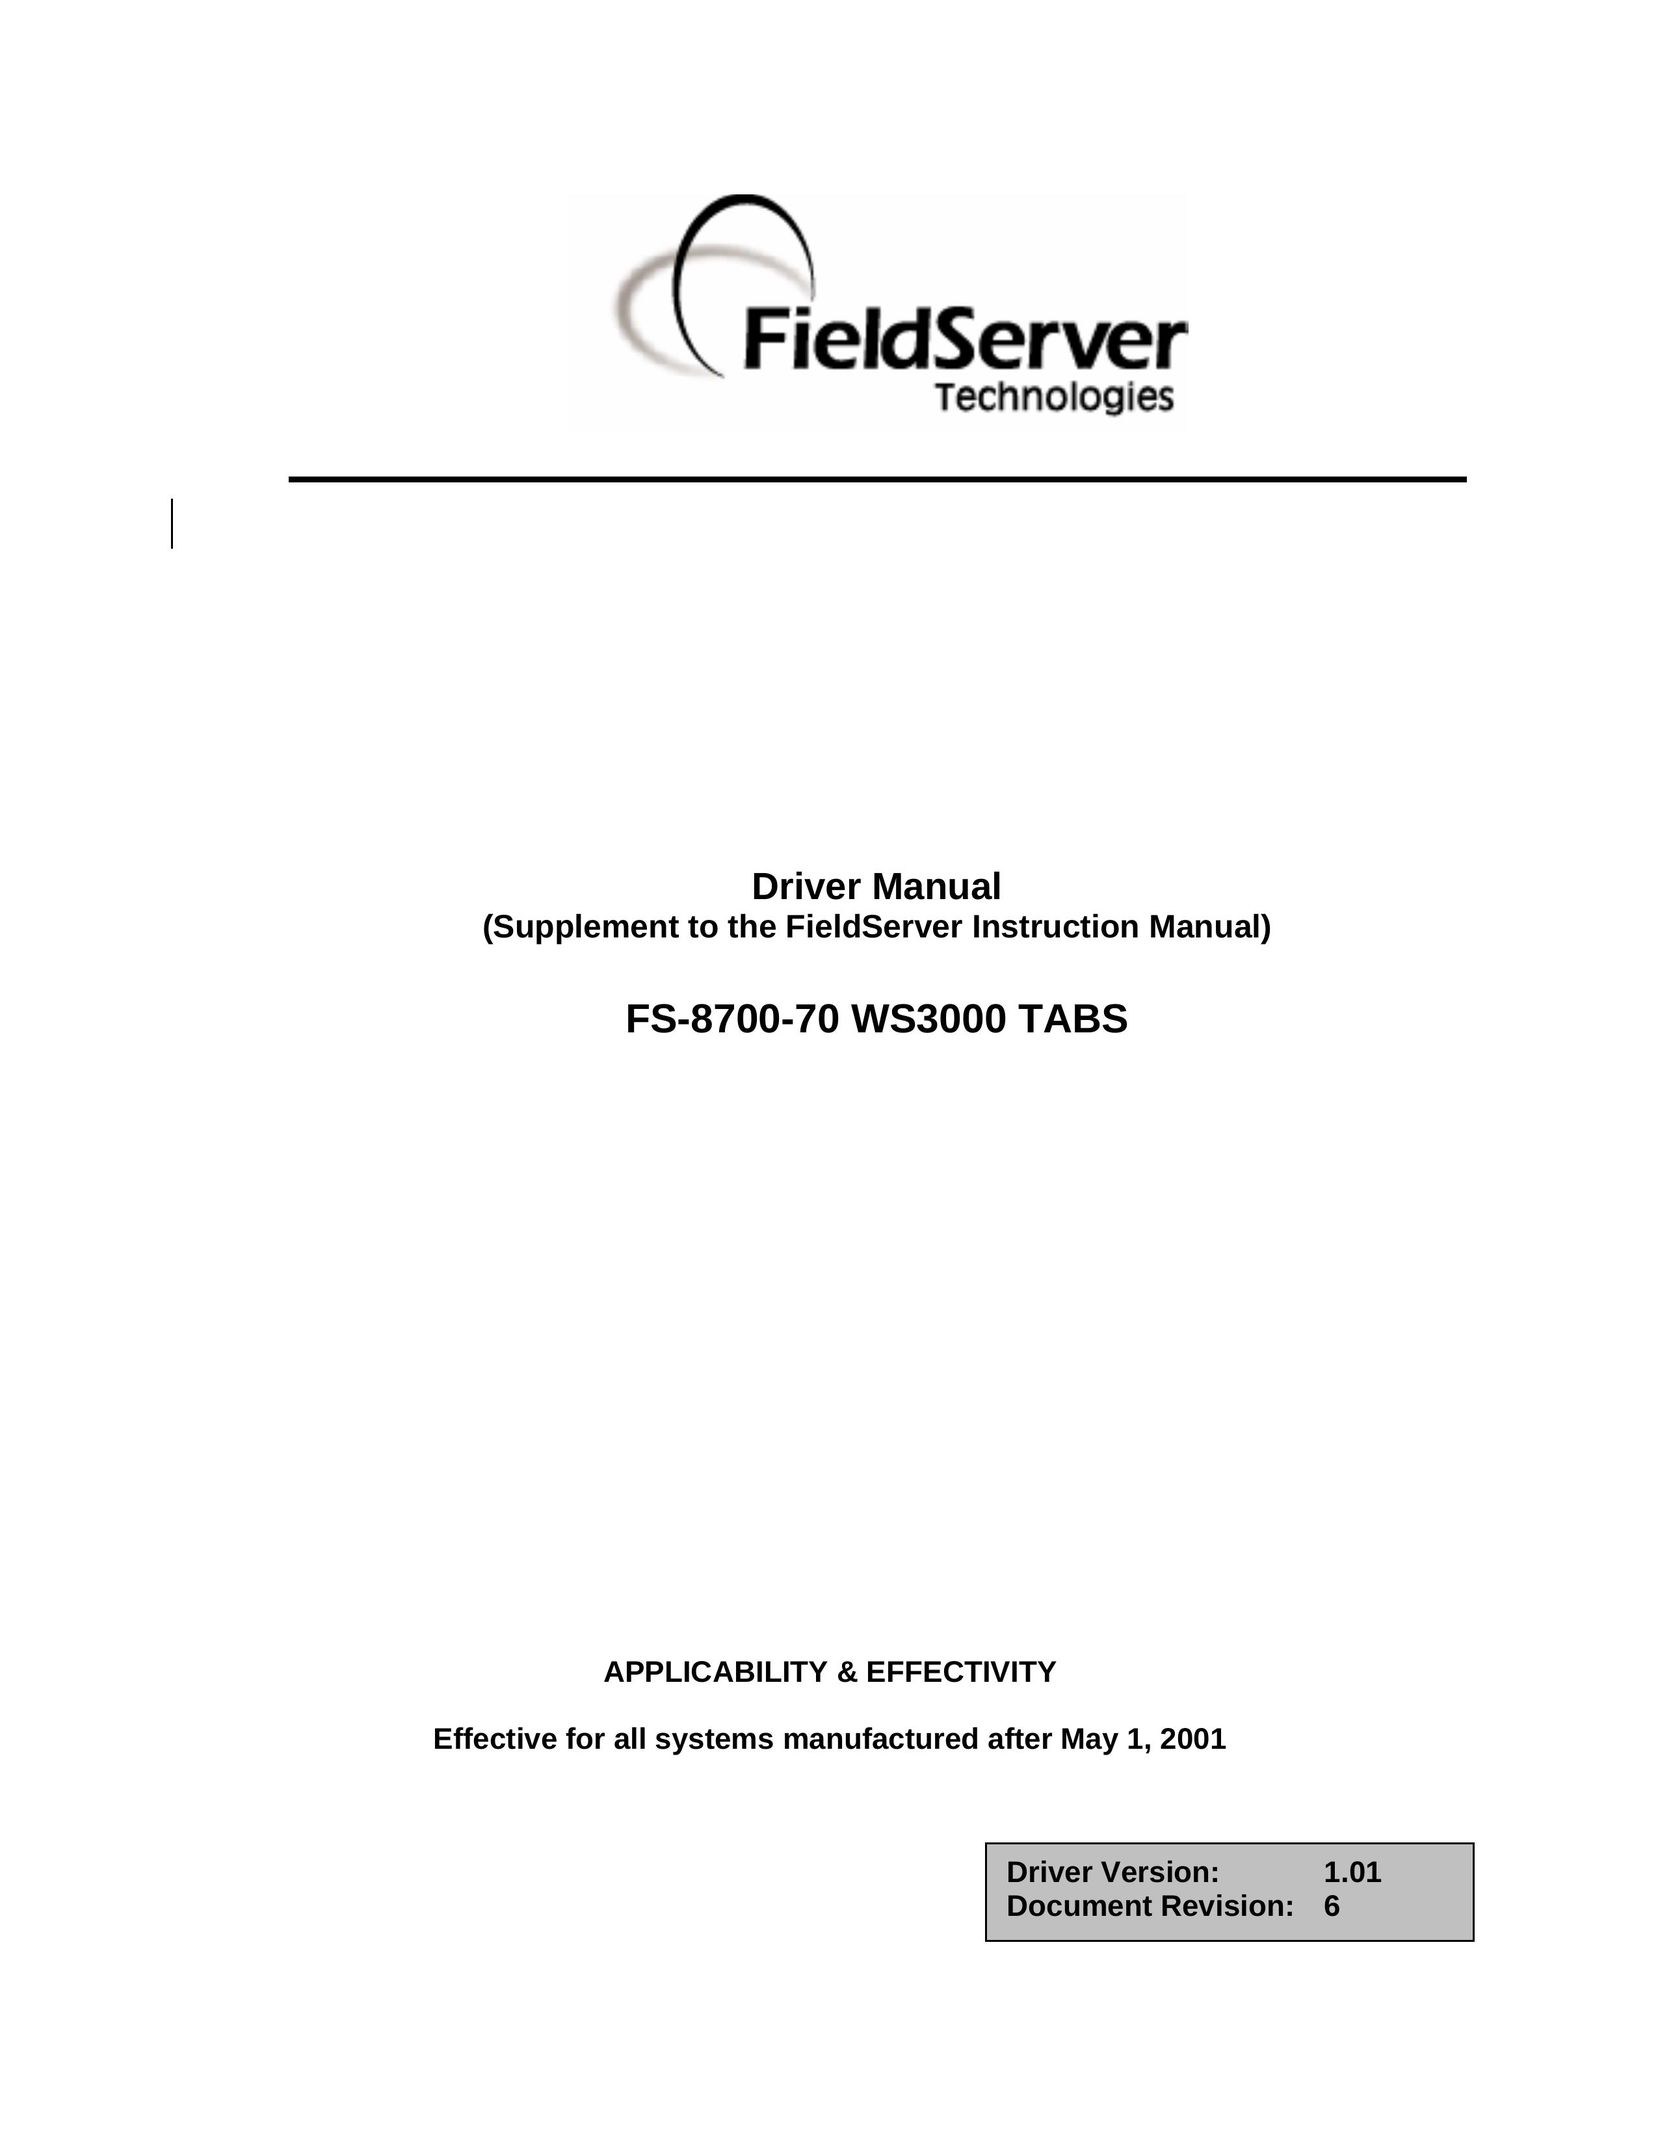 FieldServer FS-8700-70 Computer Drive User Manual